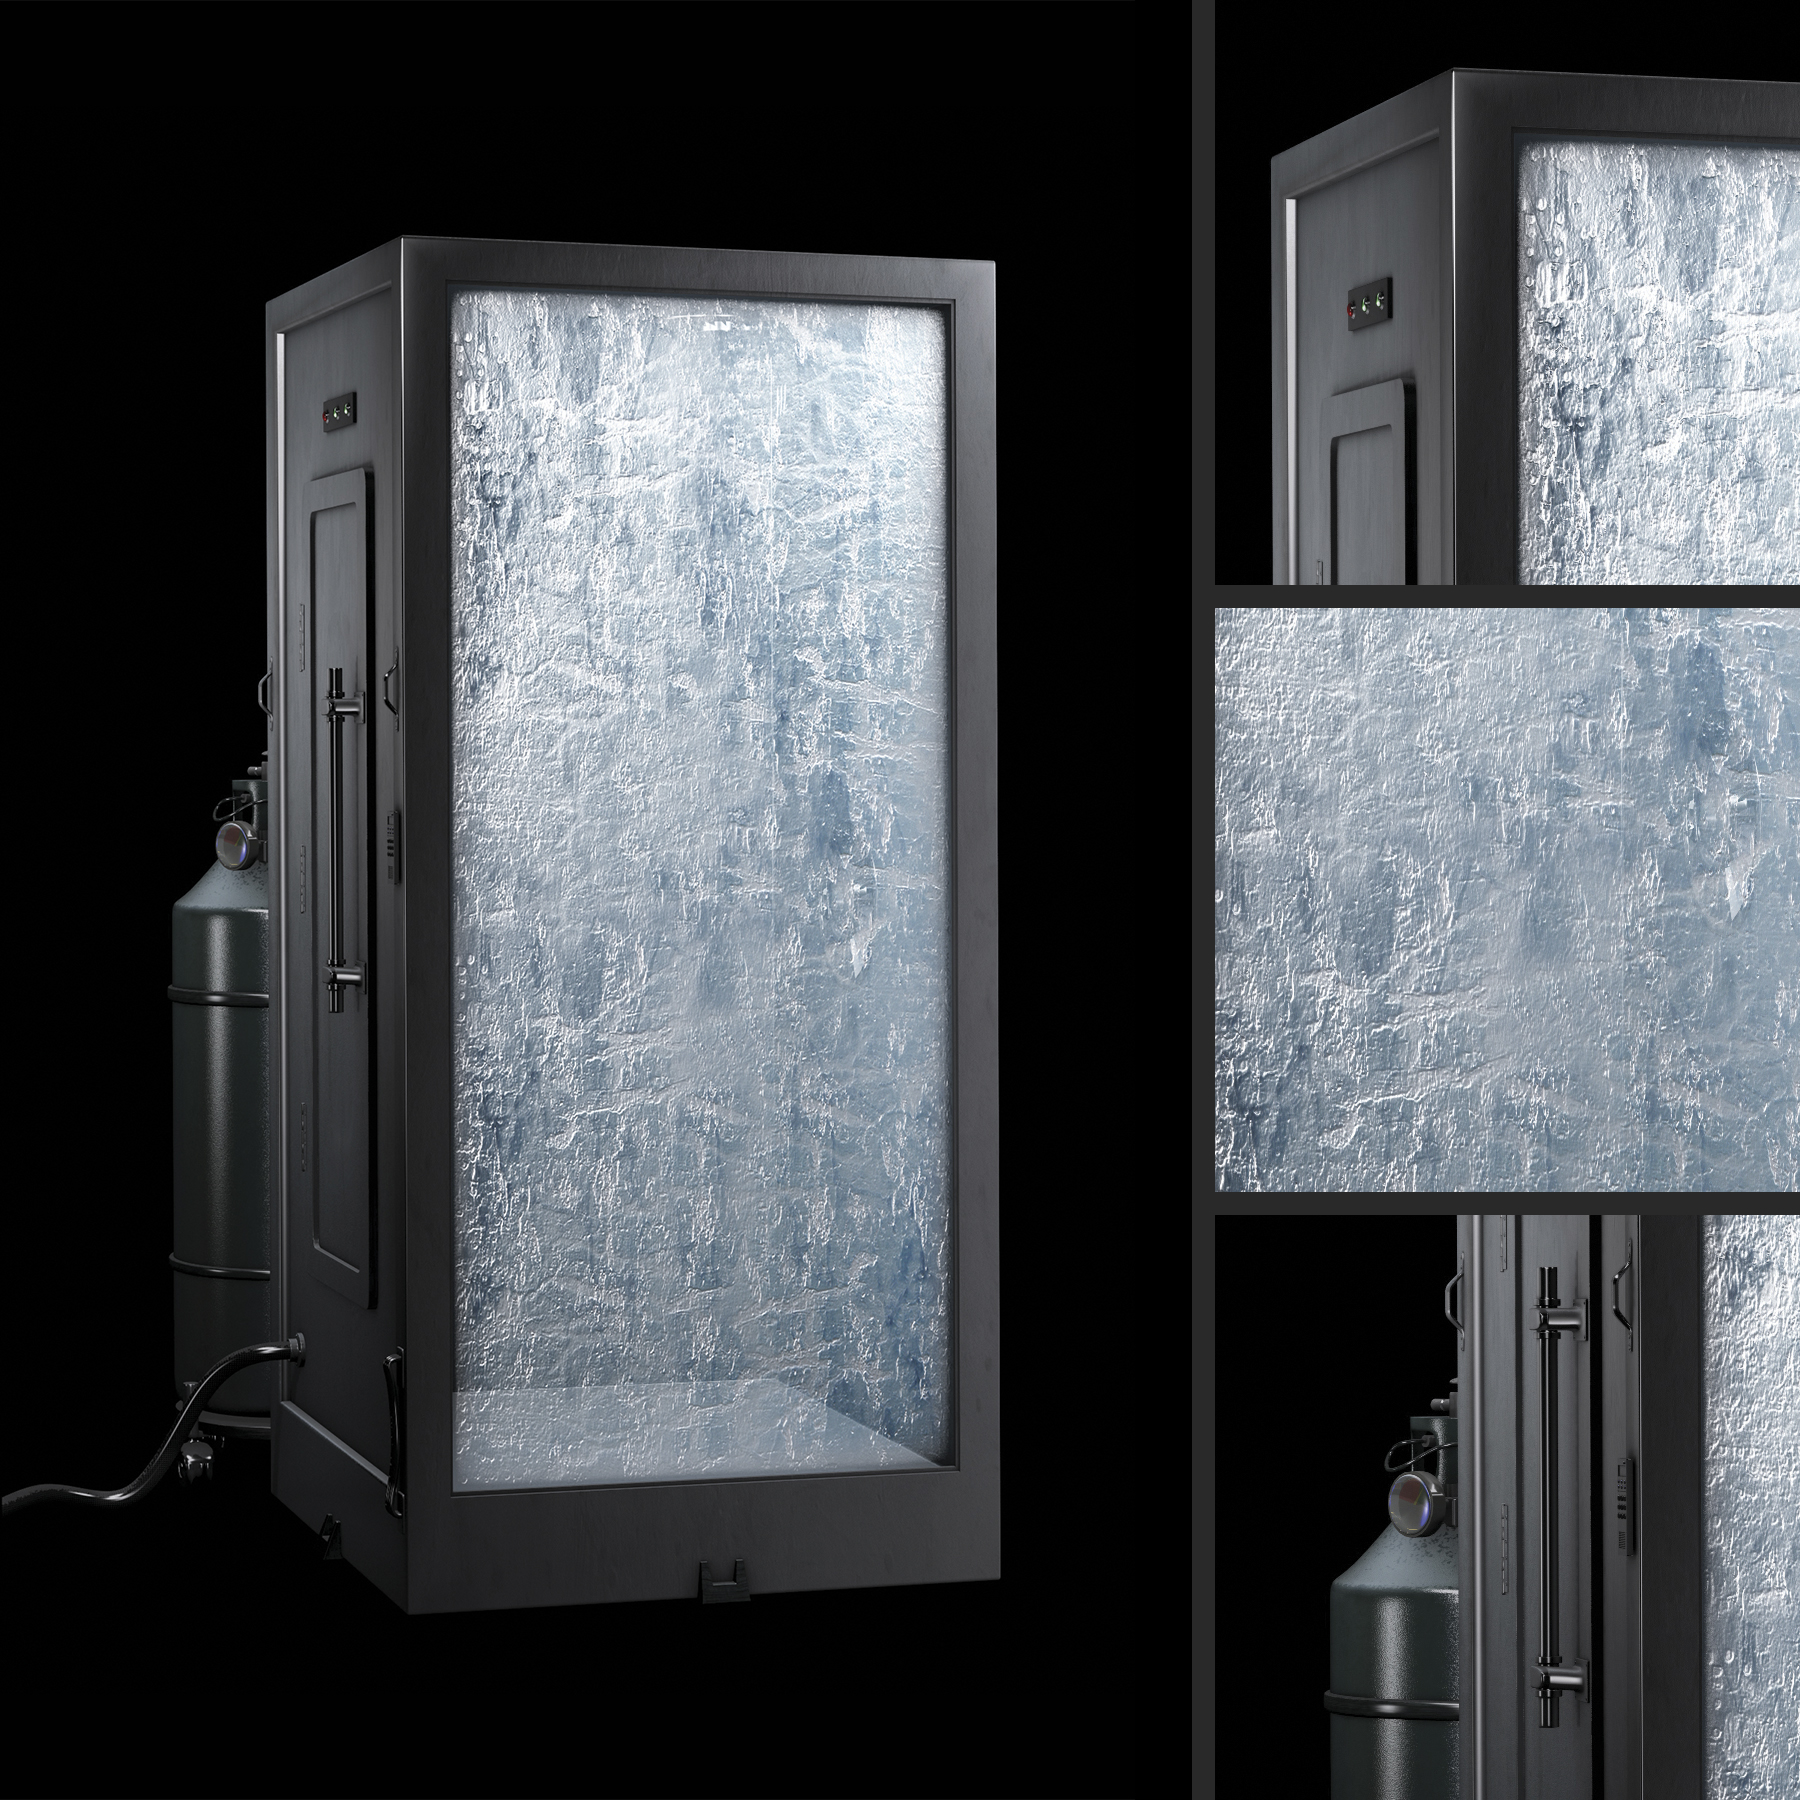 3D still frame for BMW Mini - Iced cabinet, ibernation